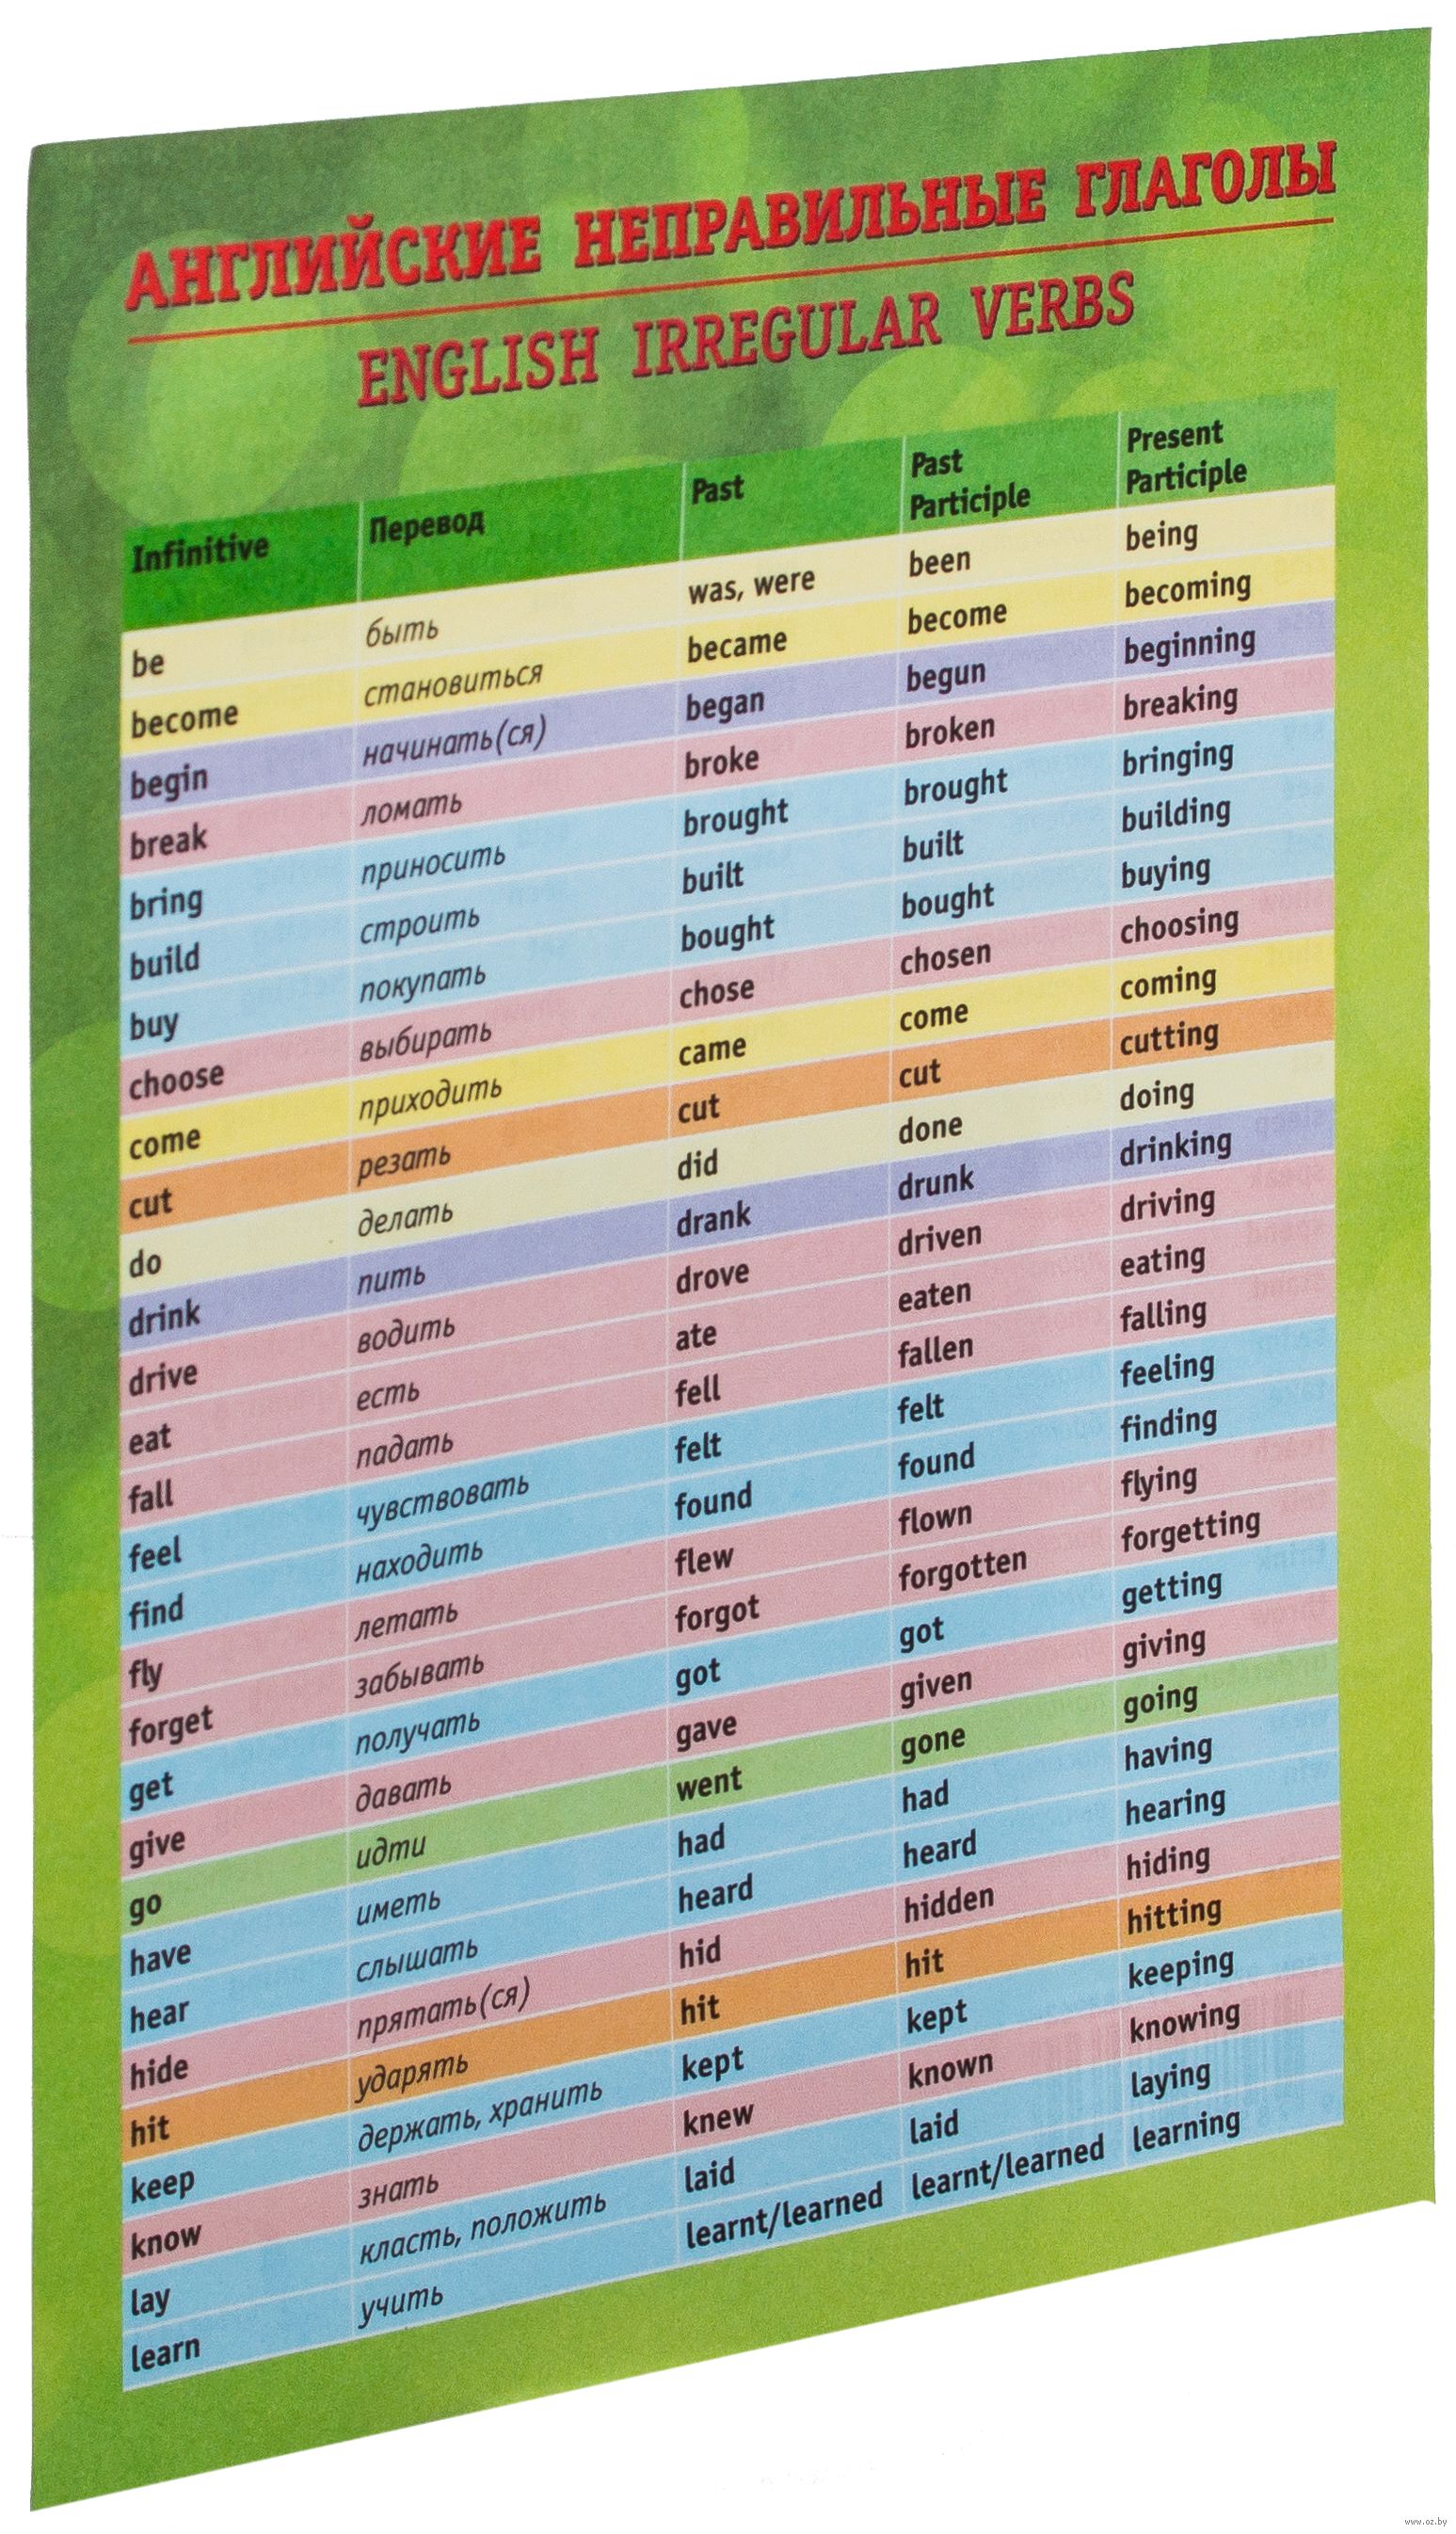 Глаголы на английском на b. Таблица неправильных глаголов англ яз. Неправильные глаголы английского. Непоавильныетглагволыт. Таблица неправильных гл.